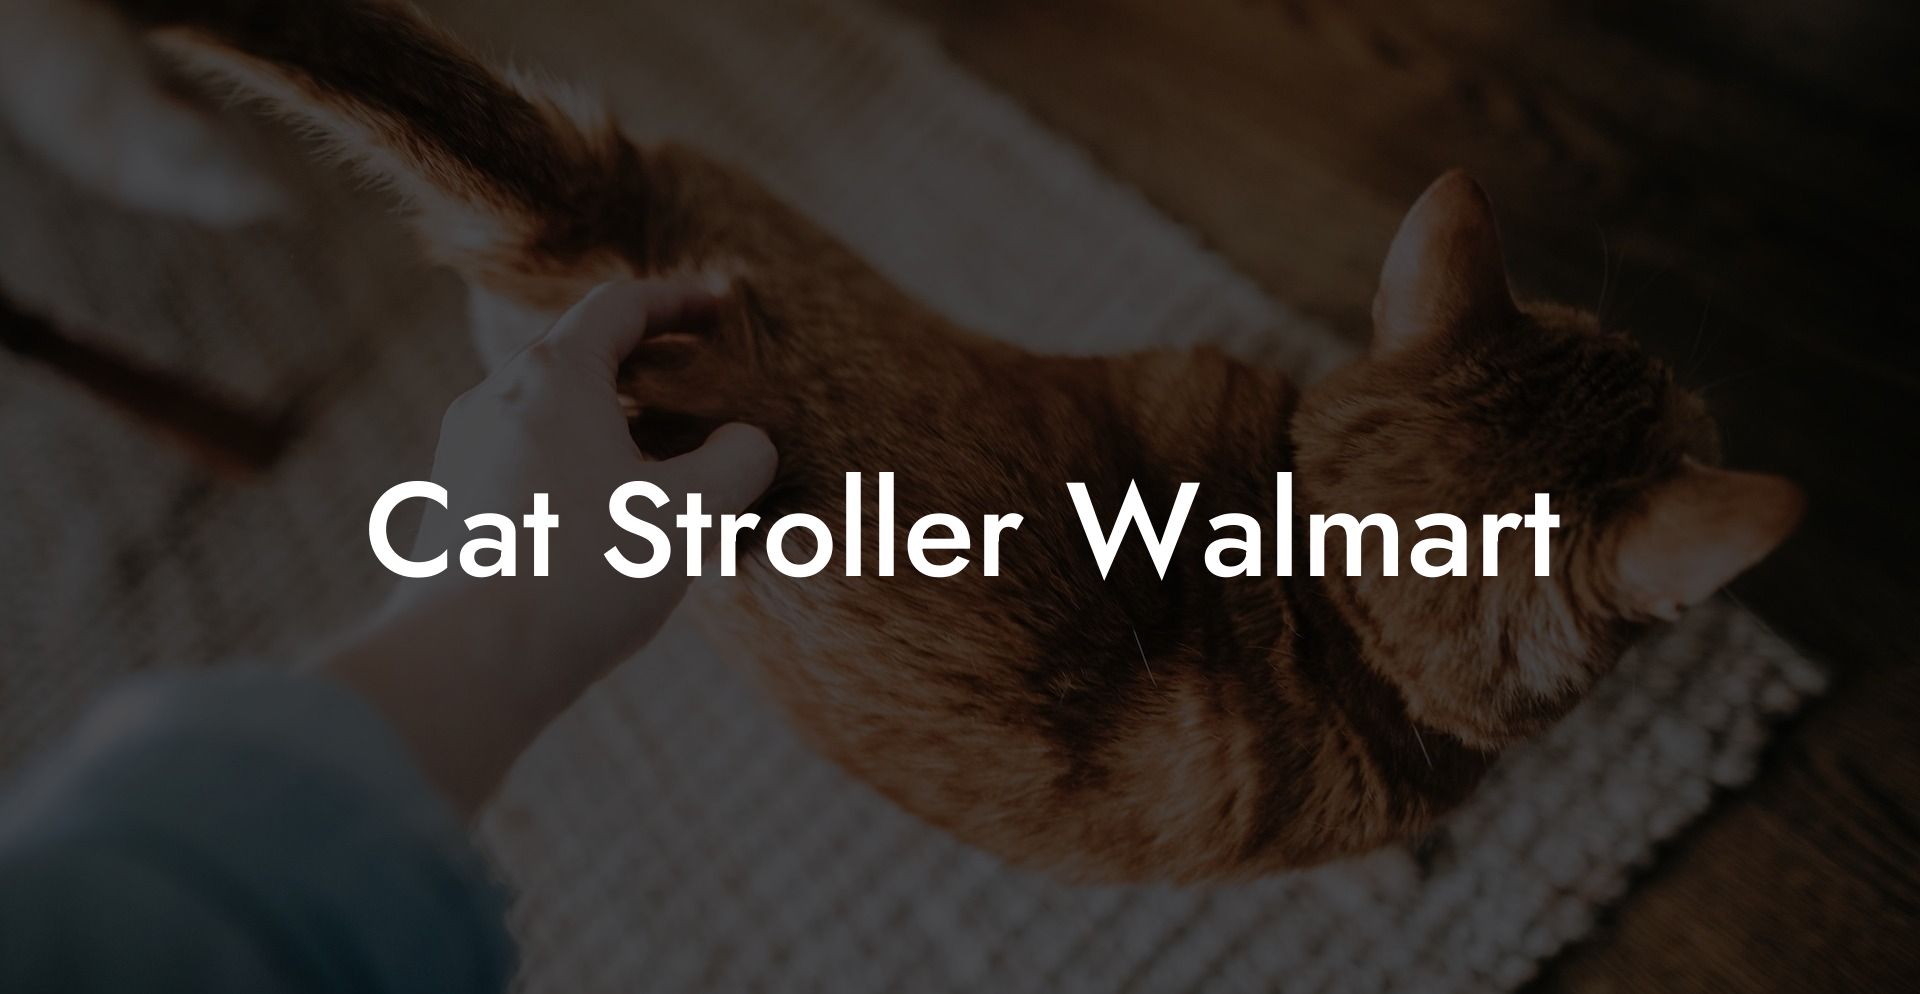 Cat Stroller Walmart